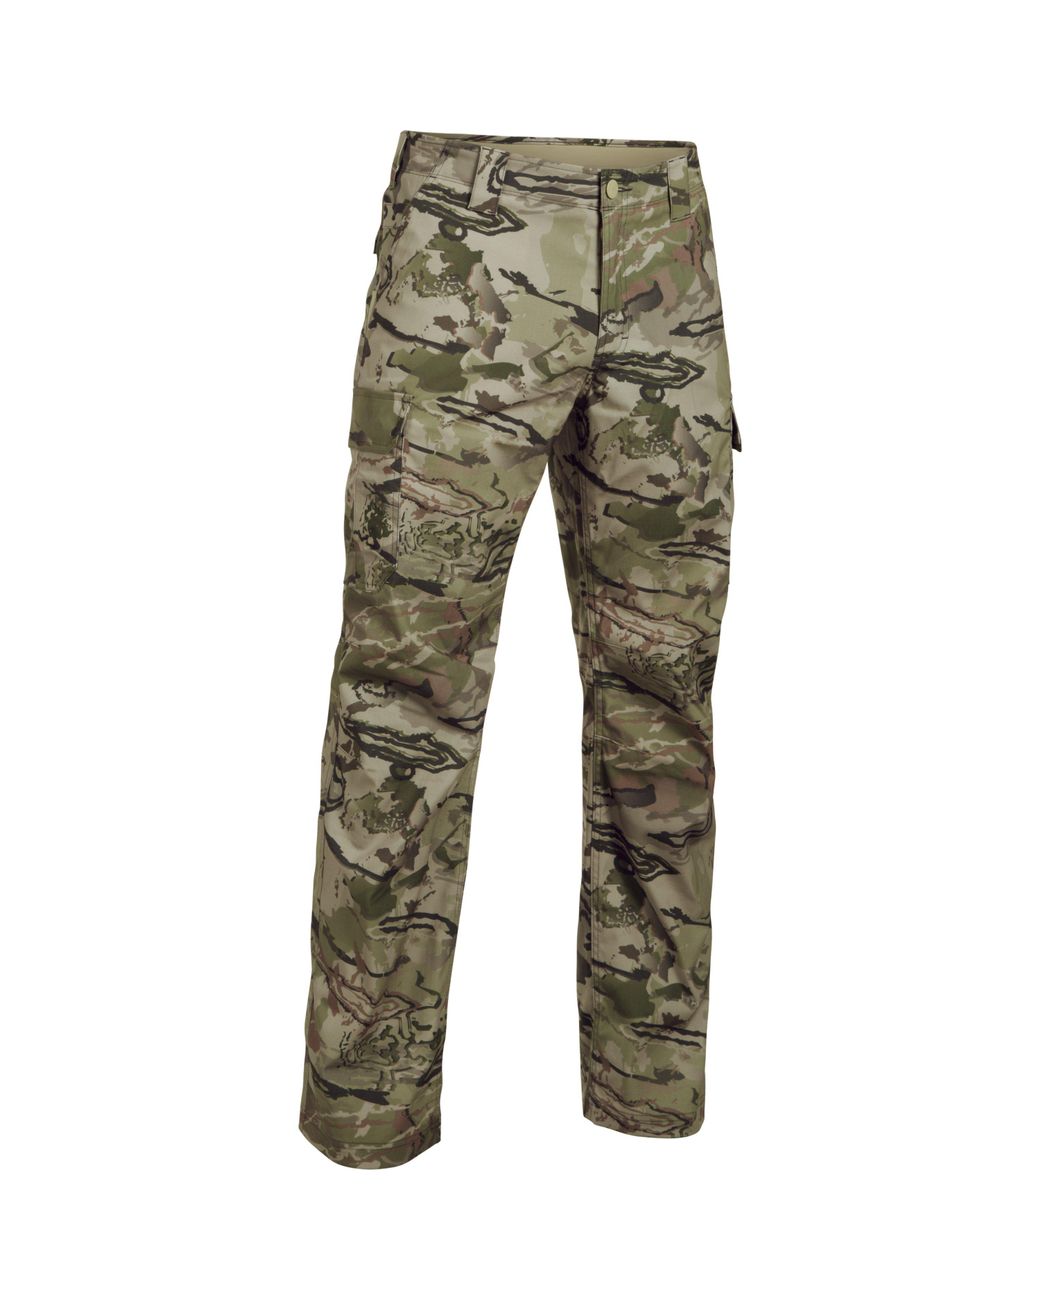 Under Armour Men's Ua Storm Tactical Camo Patrol Pants for Men